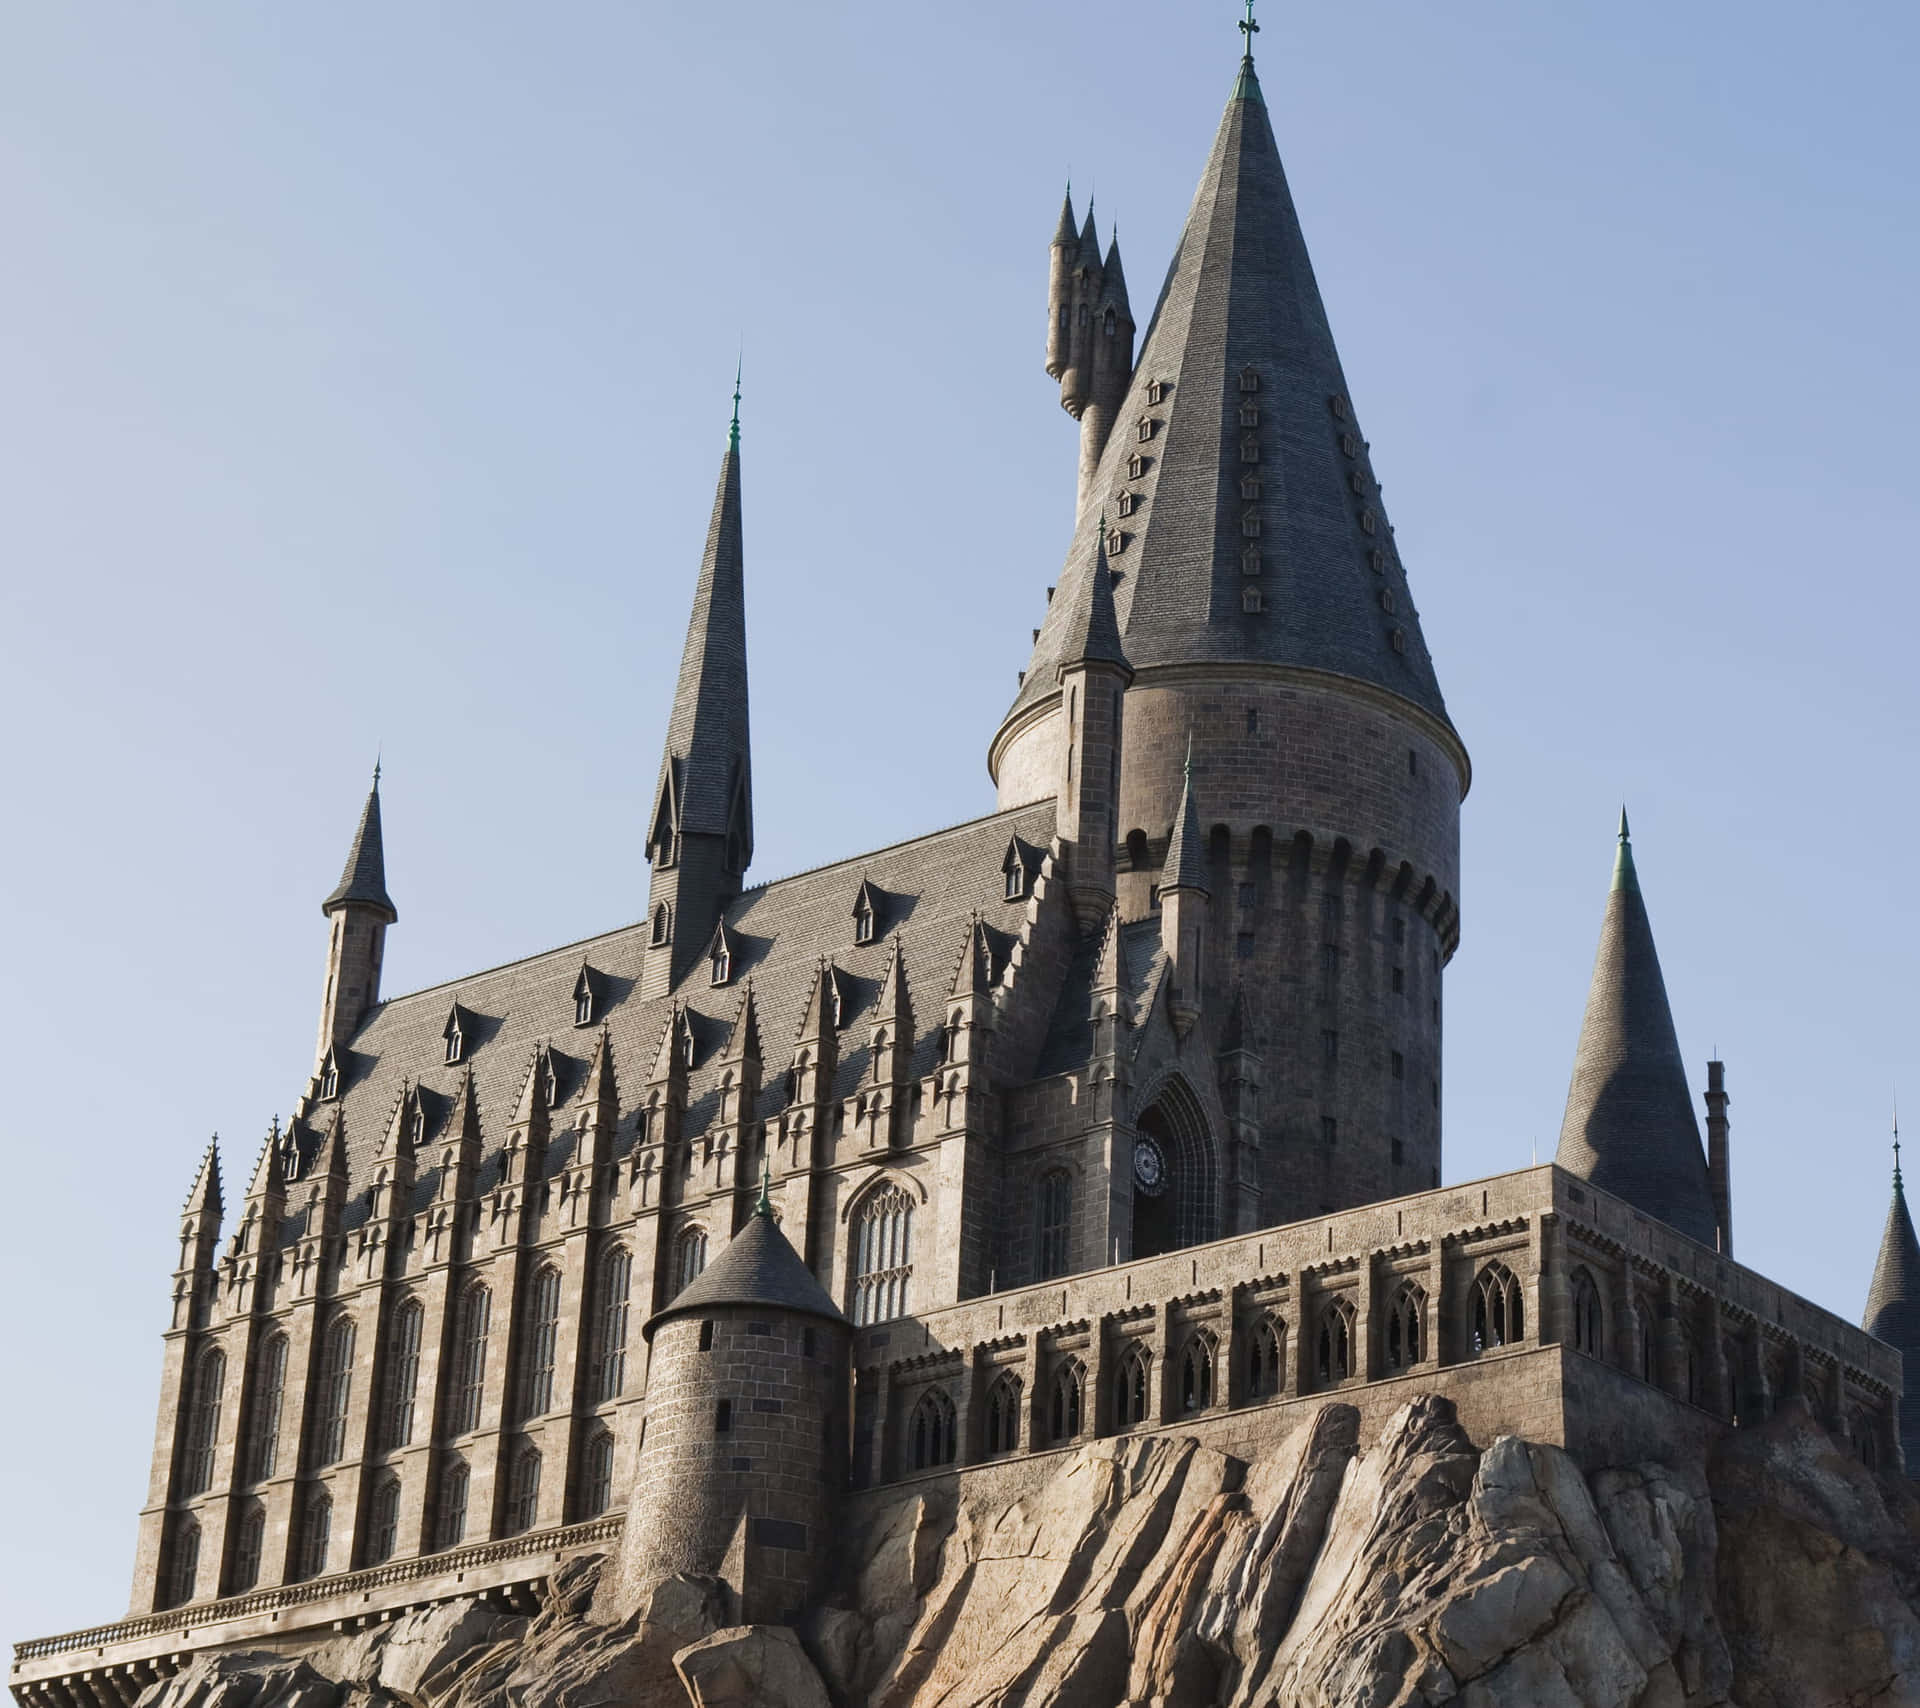 "magical Twilight Over Hogwarts Castle"